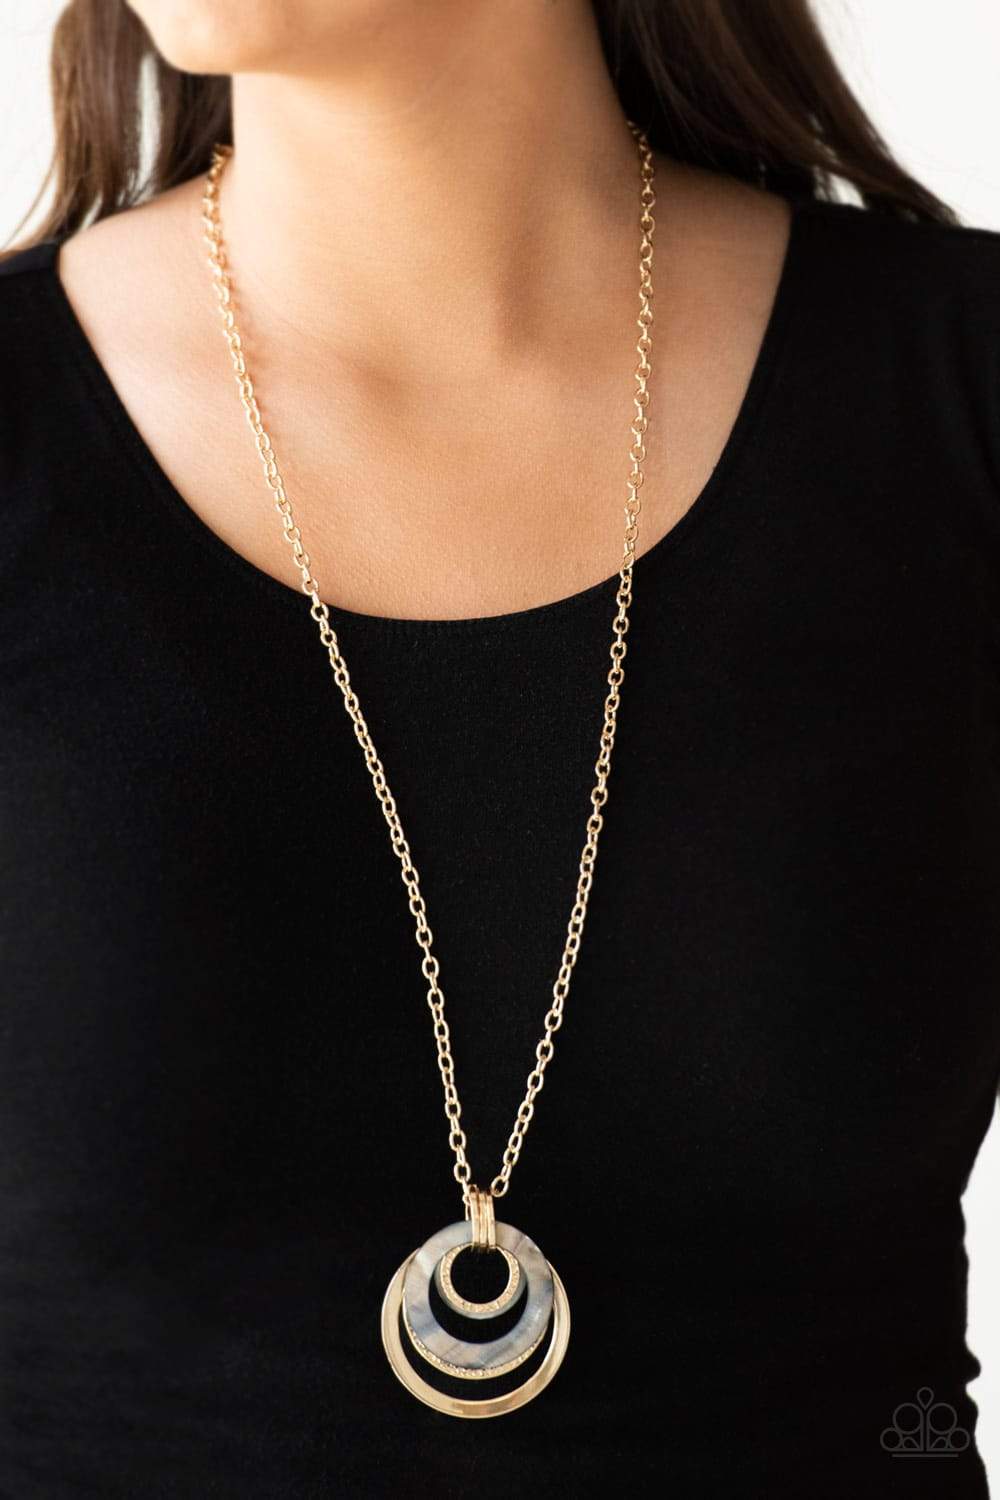 Coast Coasting Gold Necklace - Paparazzi Accessories - model -CarasShop.com - $5 Jewelry by Cara Jewels